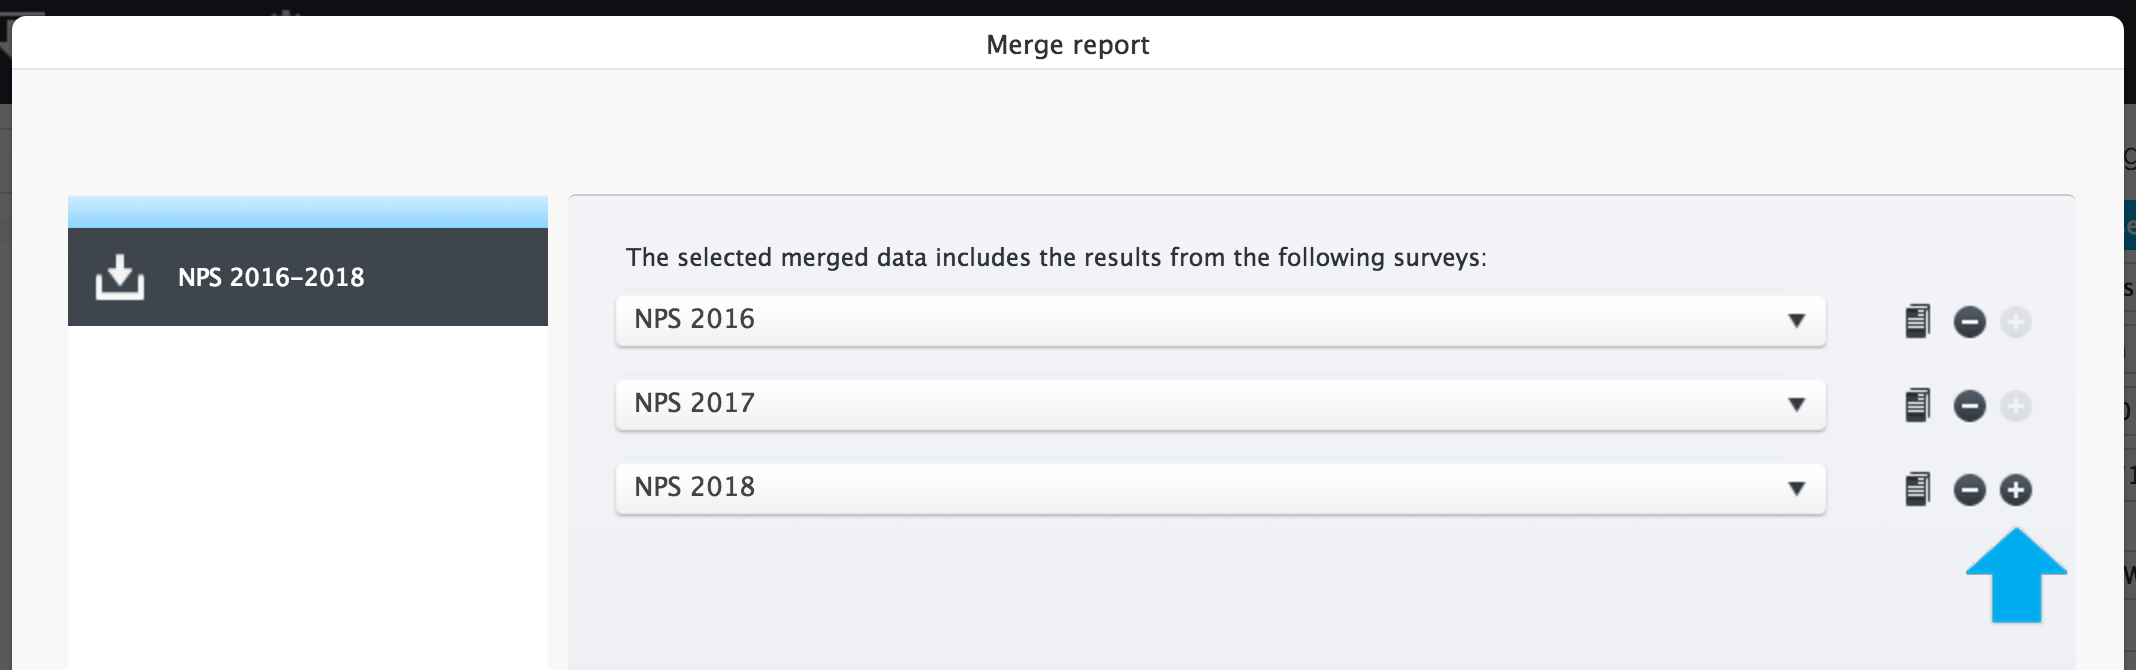 merge_data2.png